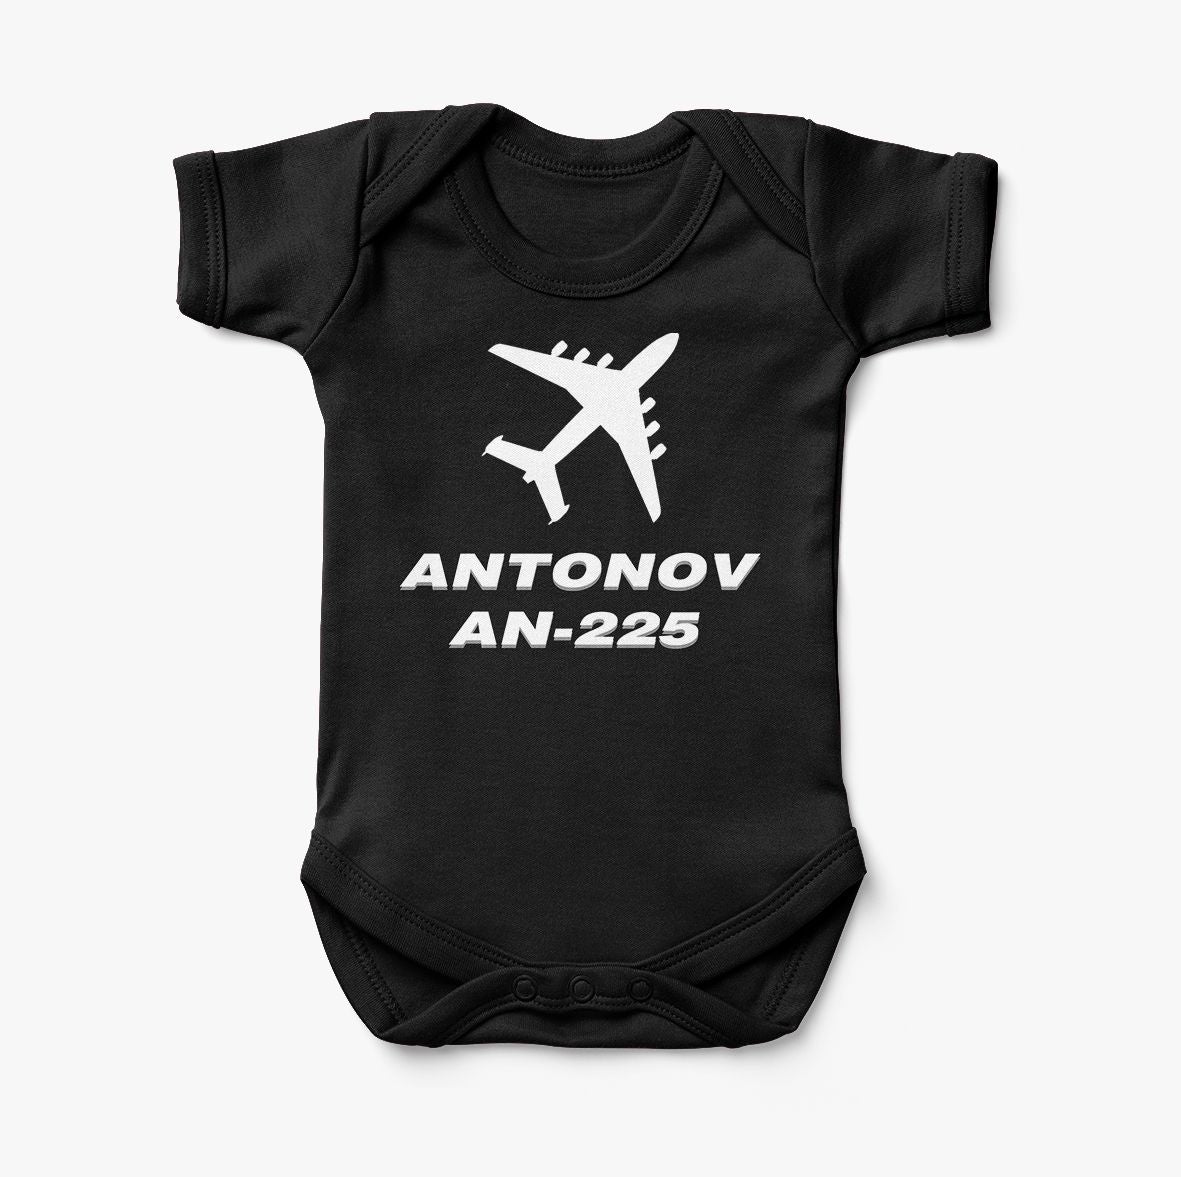 Antonov AN-225 (28) Designed Baby Bodysuits